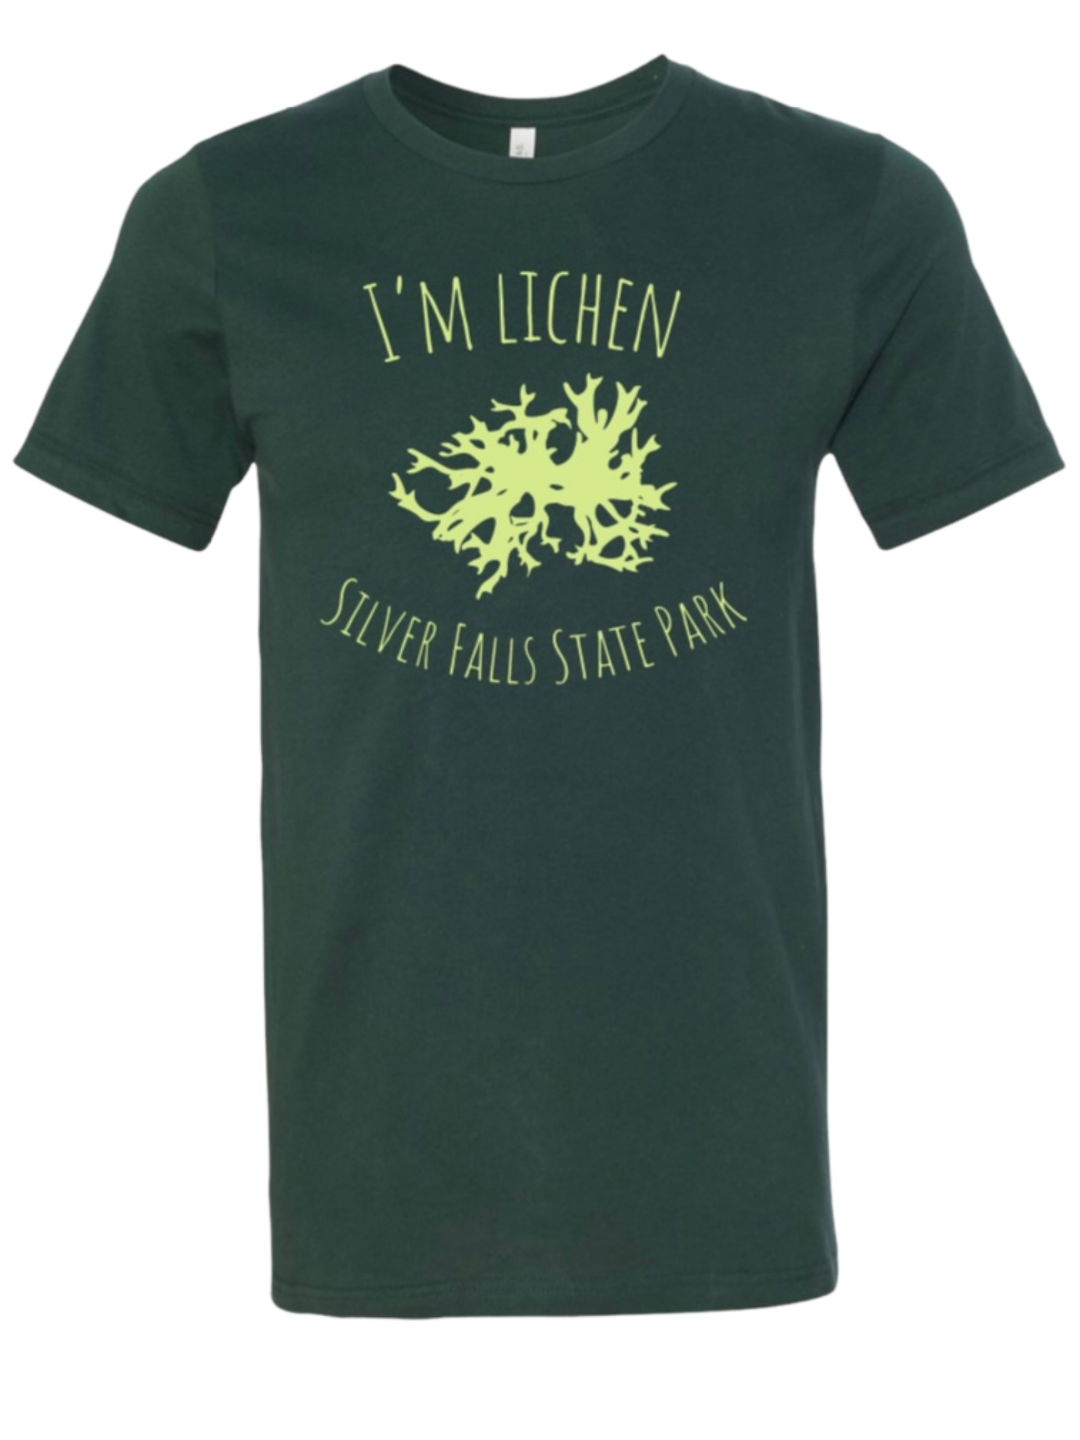 I'm Lichen Silver Falls T-Shirt